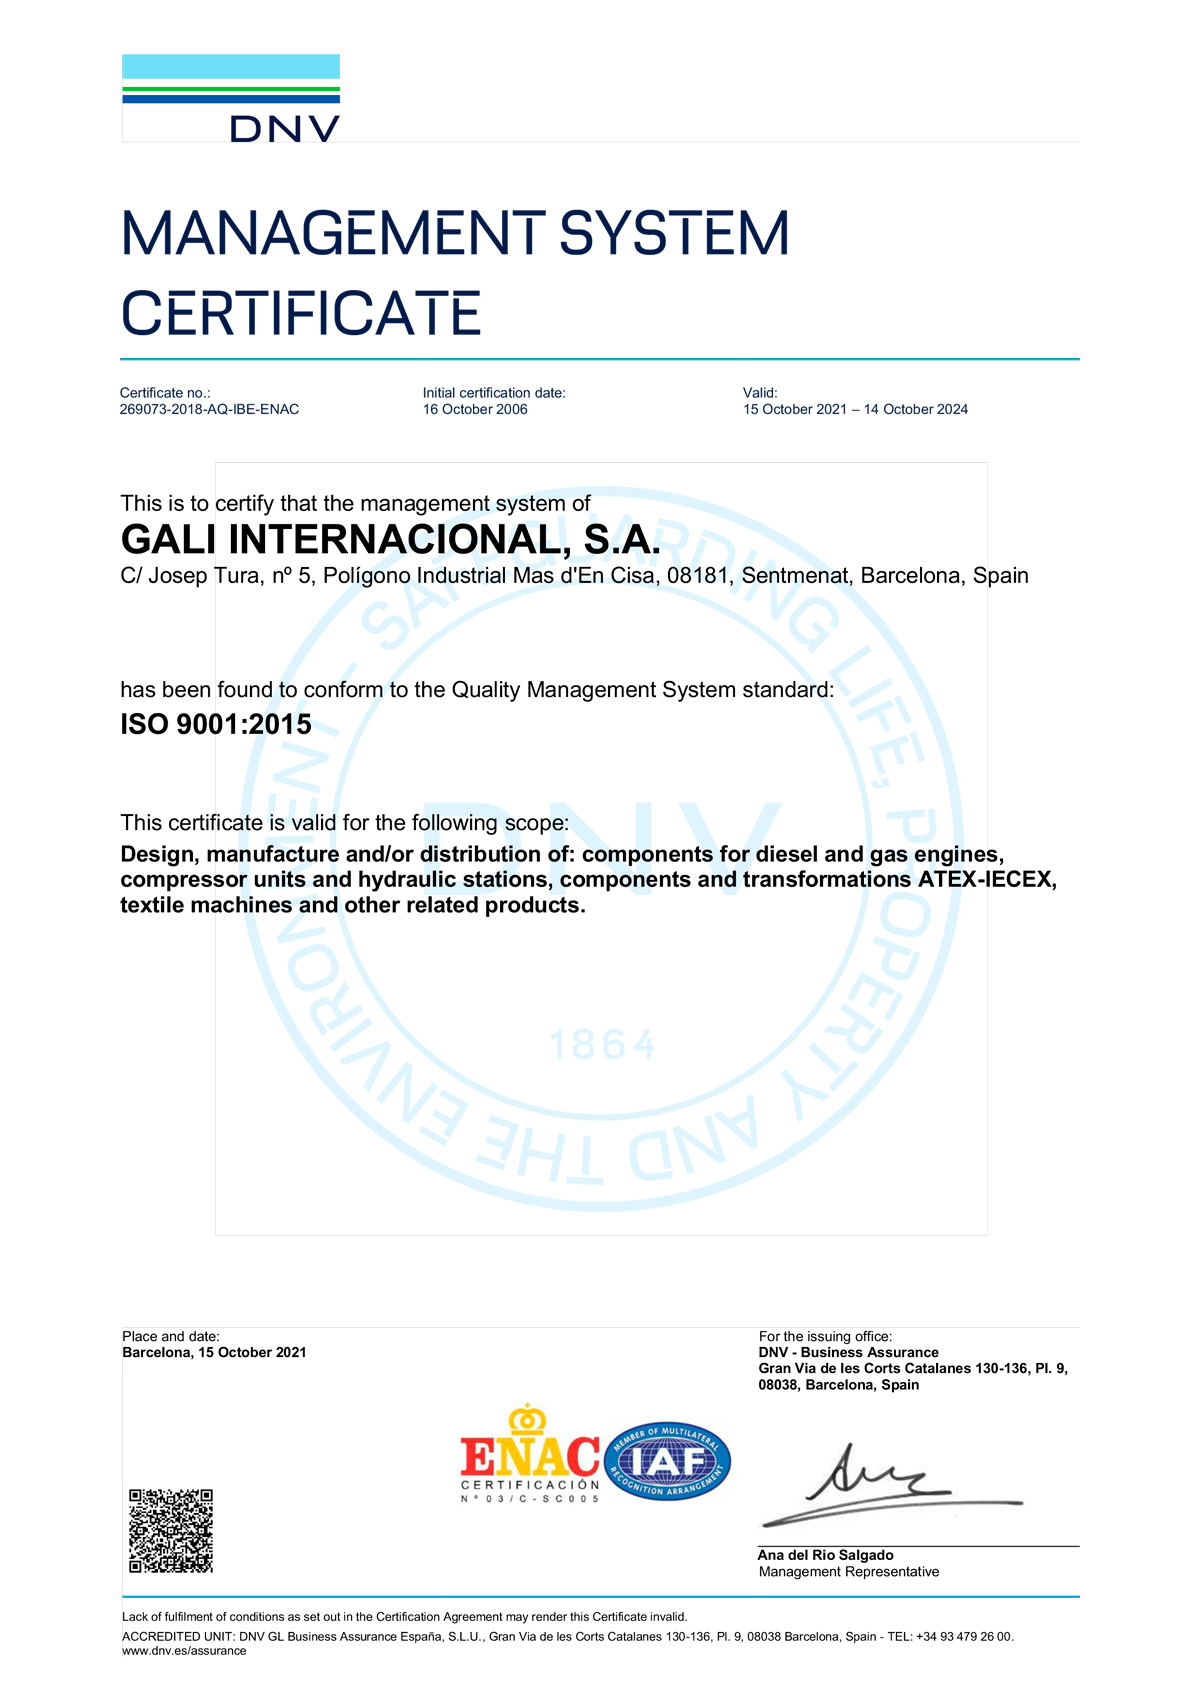 Gali International certification ISO-9001